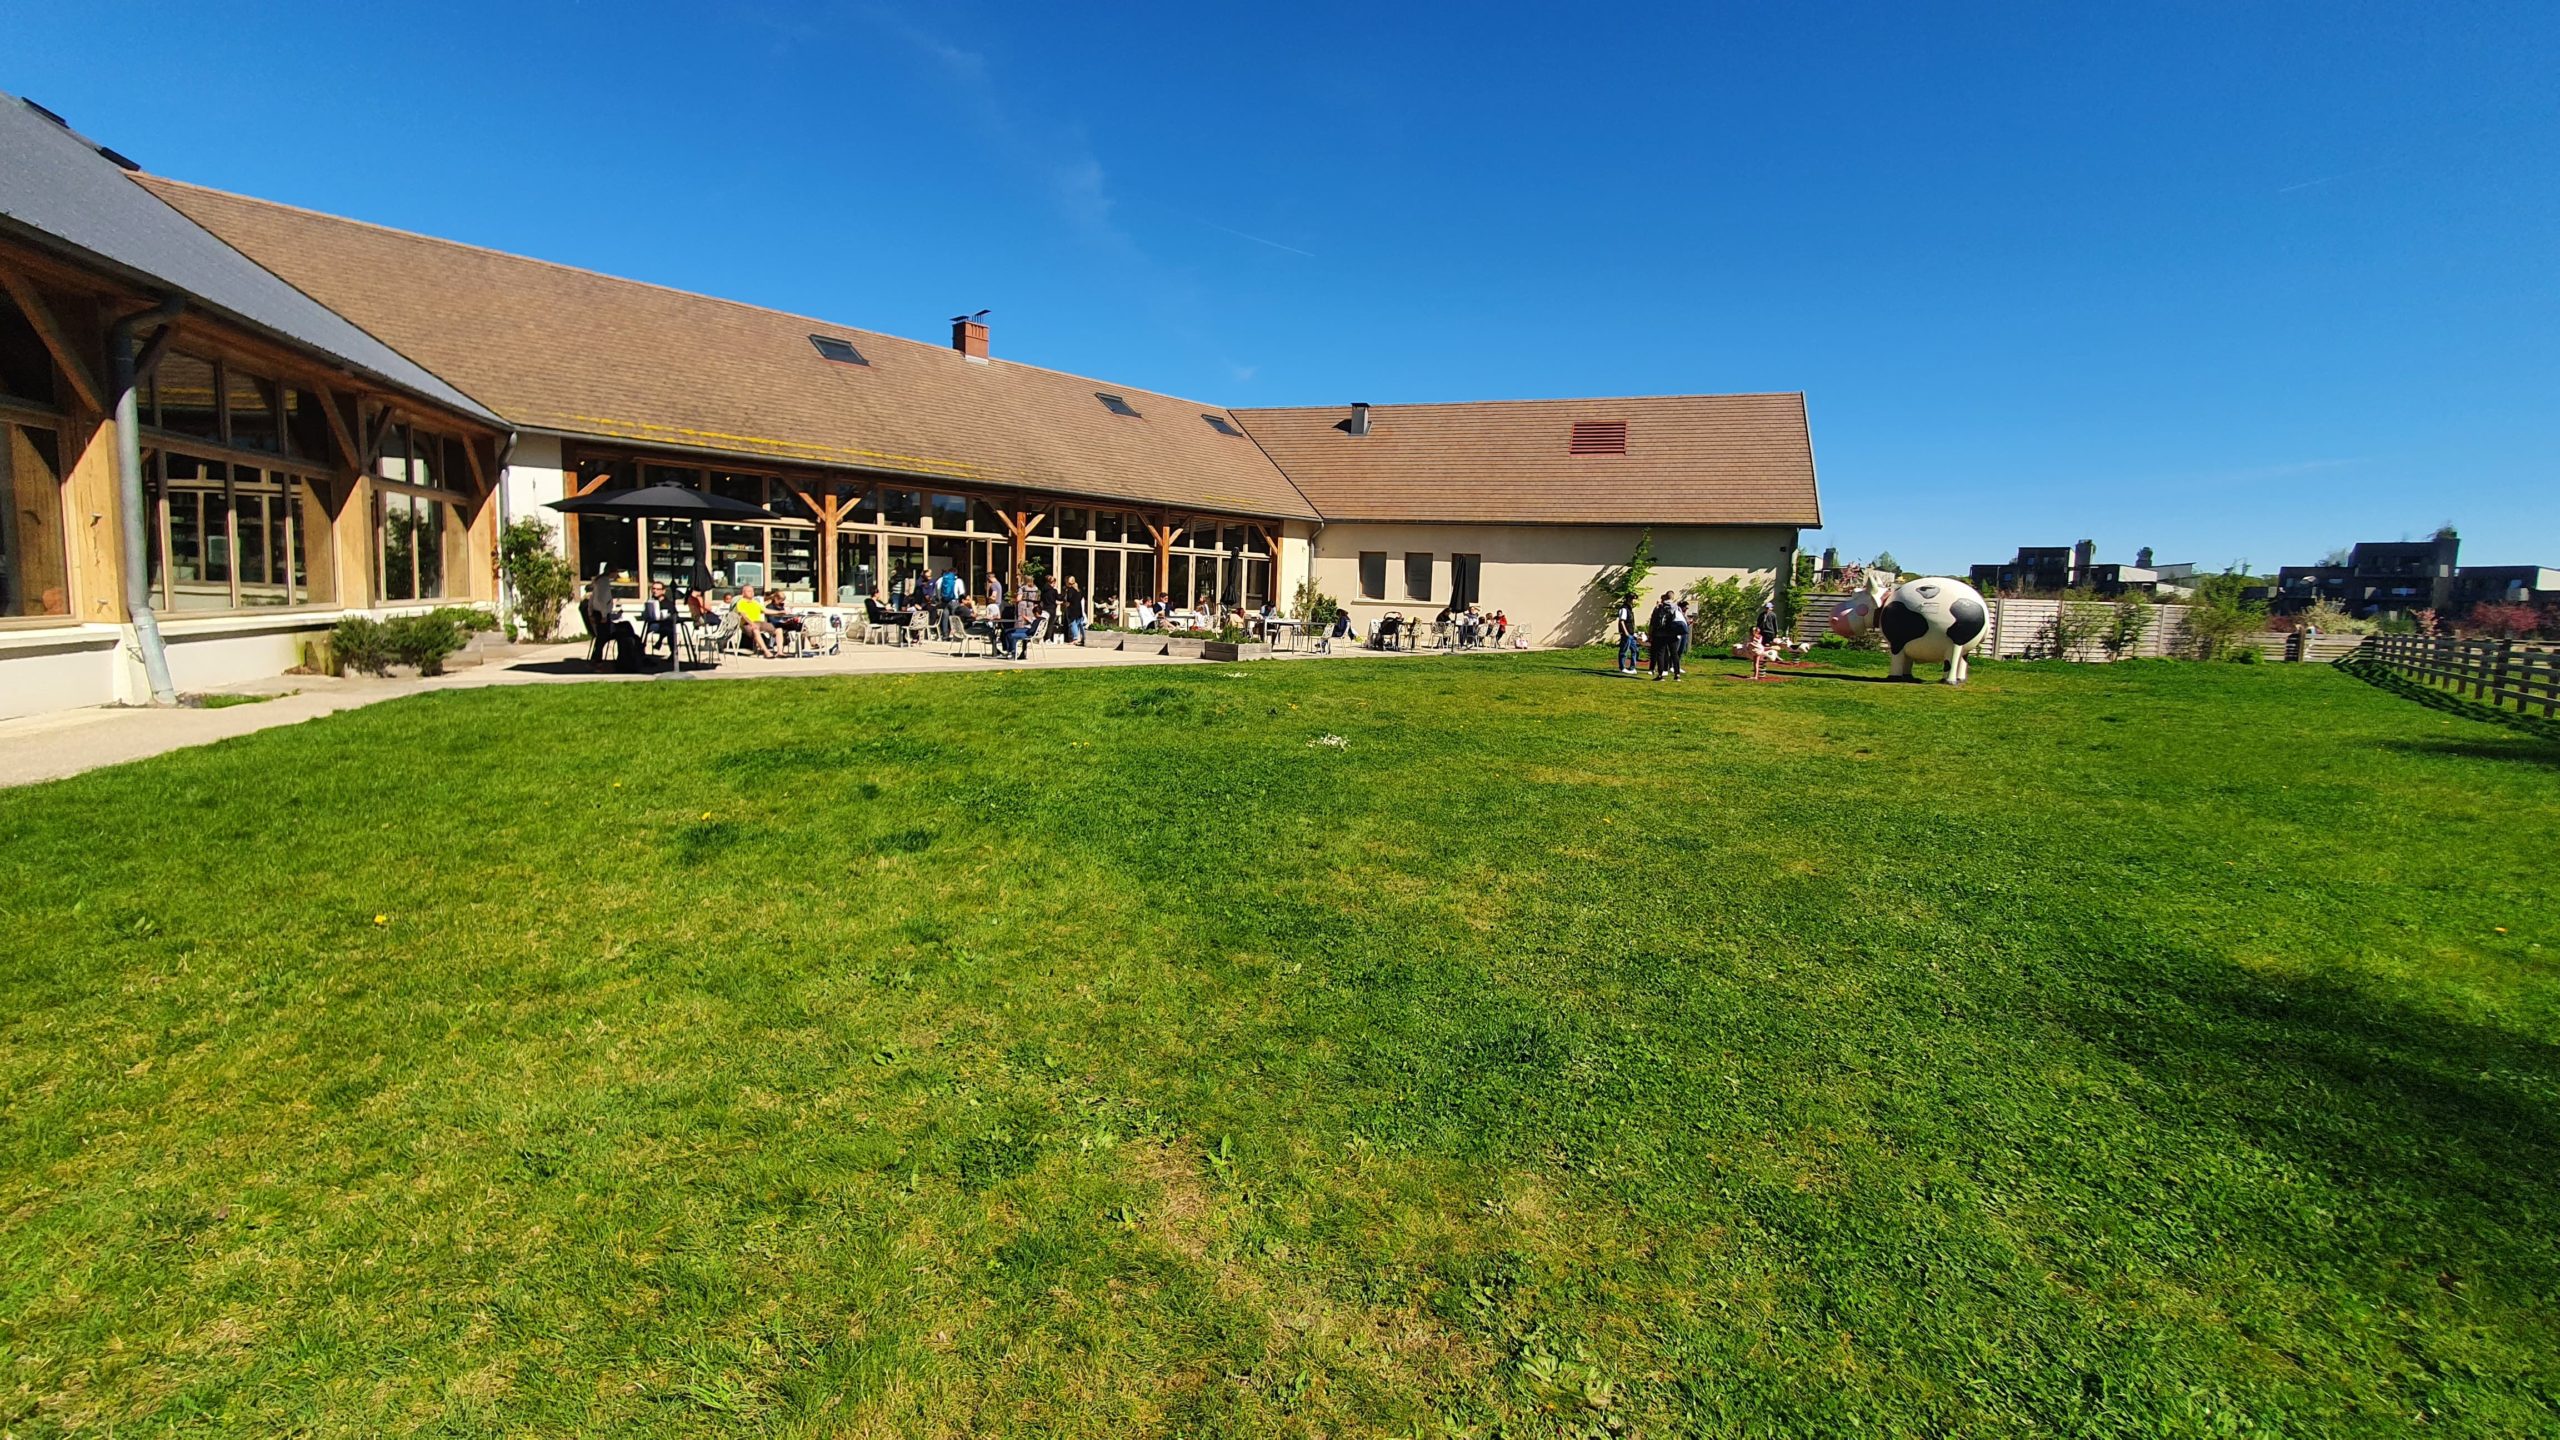 terrasse restaurant ferme pedagogique center parcs village nature paris